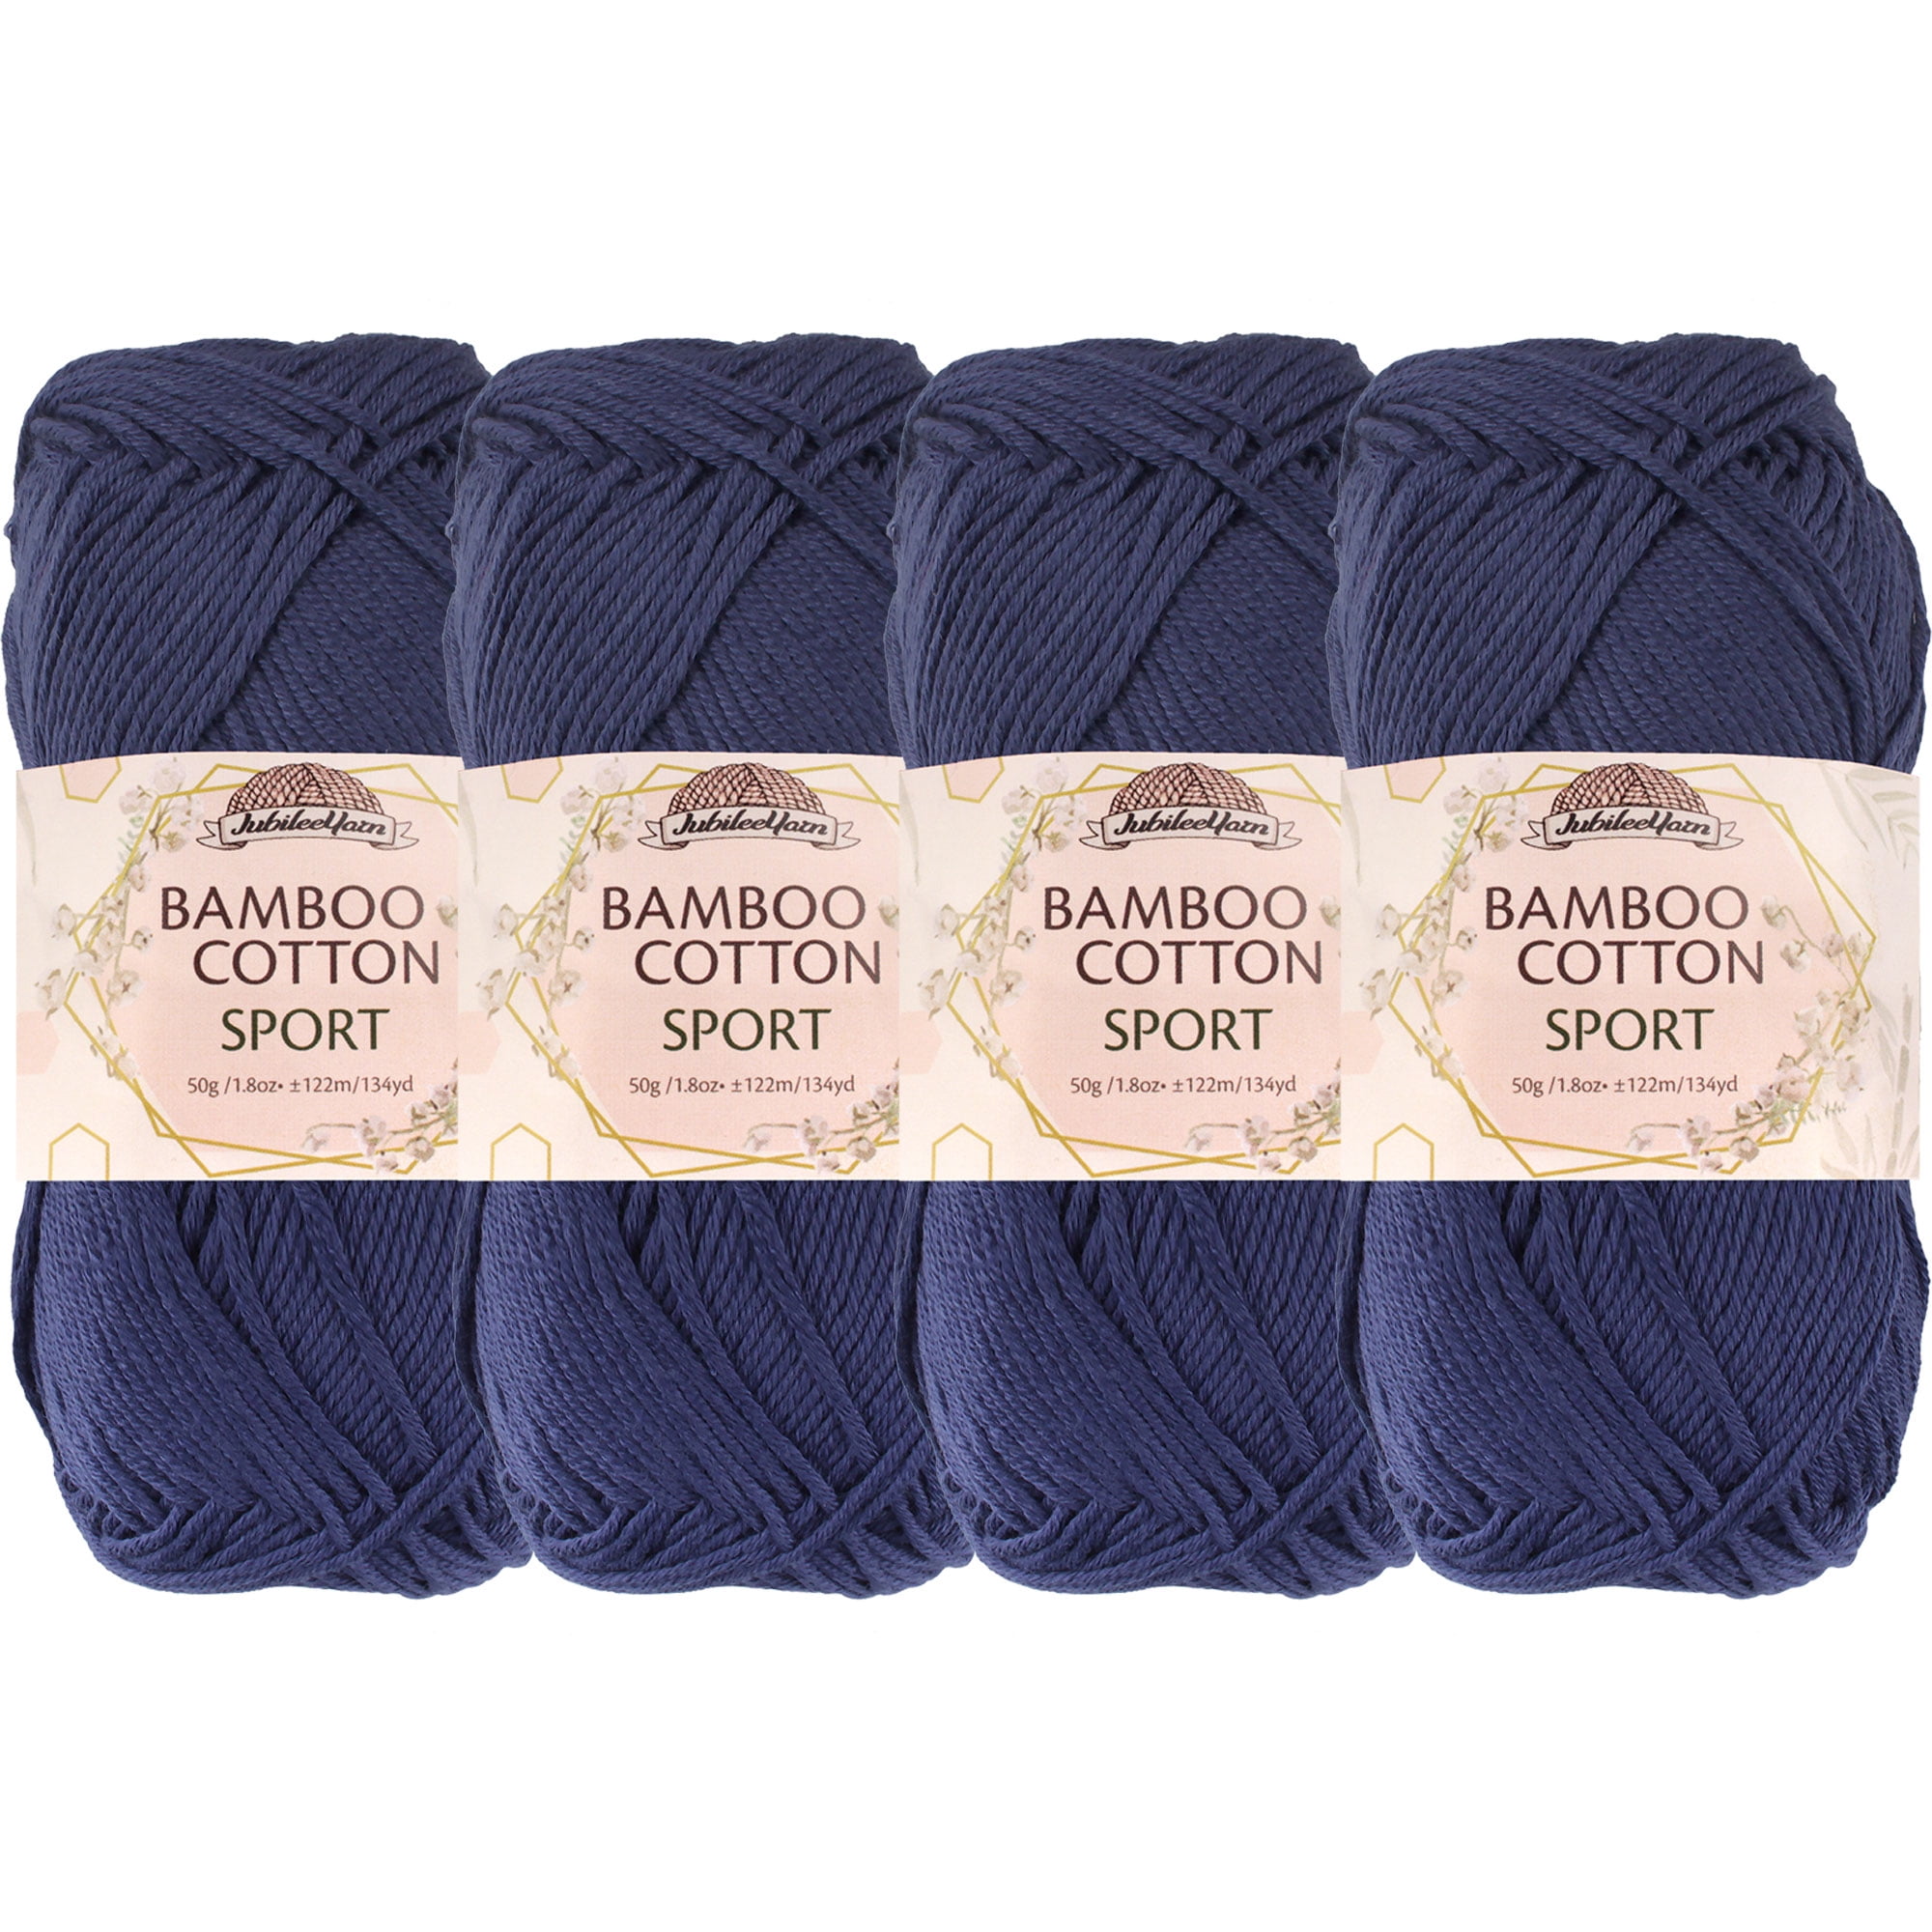 JubileeYarn Bamboo Cotton Sport 4 Ply Yarn - 50g/skein - Cold Night Blue -  4 Skeins